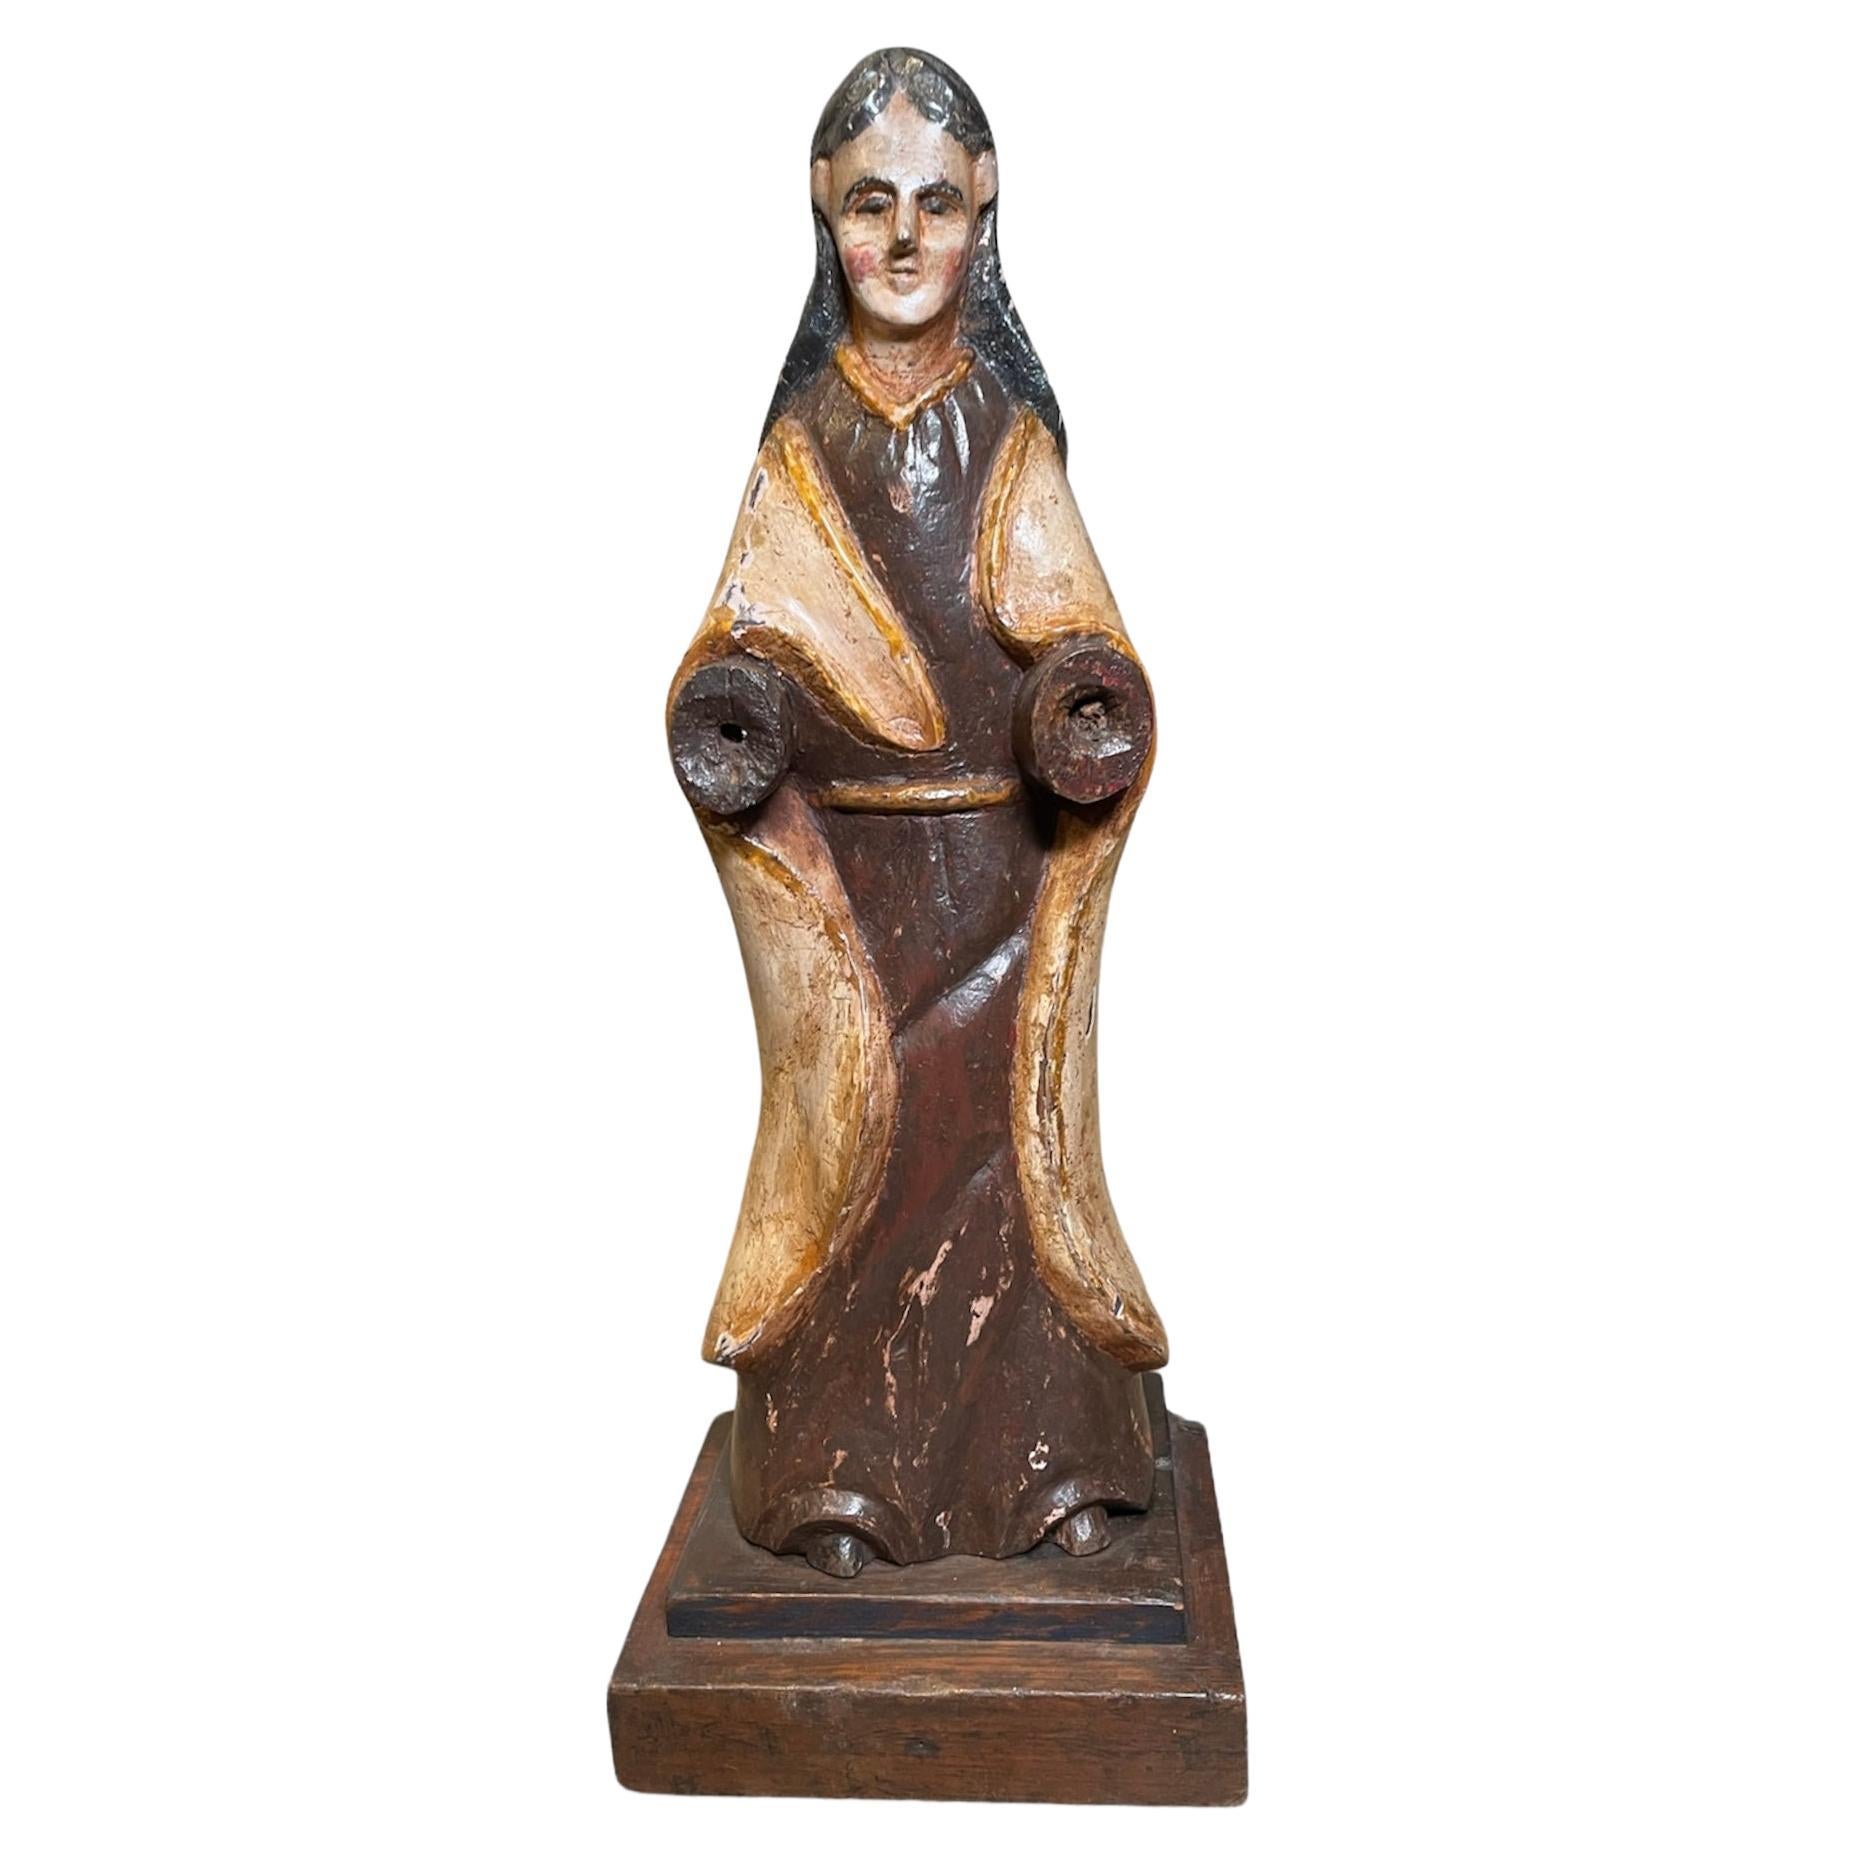 Puerto Rican Santos De Palos/Wood Carved Sculpture of Our Lady of Mount Carmel For Sale